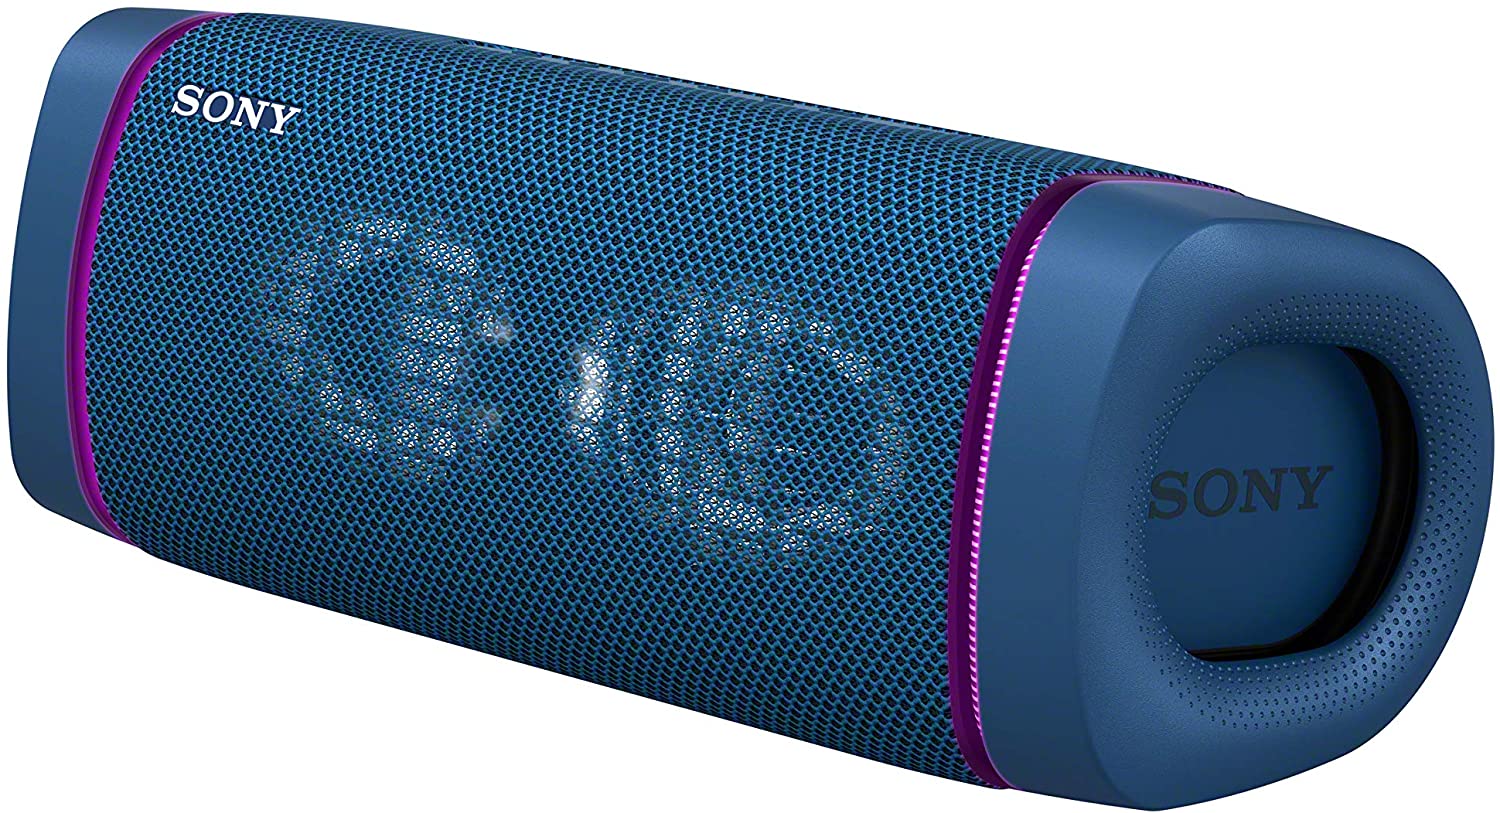 Sony SRS-XB33 Extra Bass Waterproof Wireless Portable Bluetooth Speaker - Blue (New)